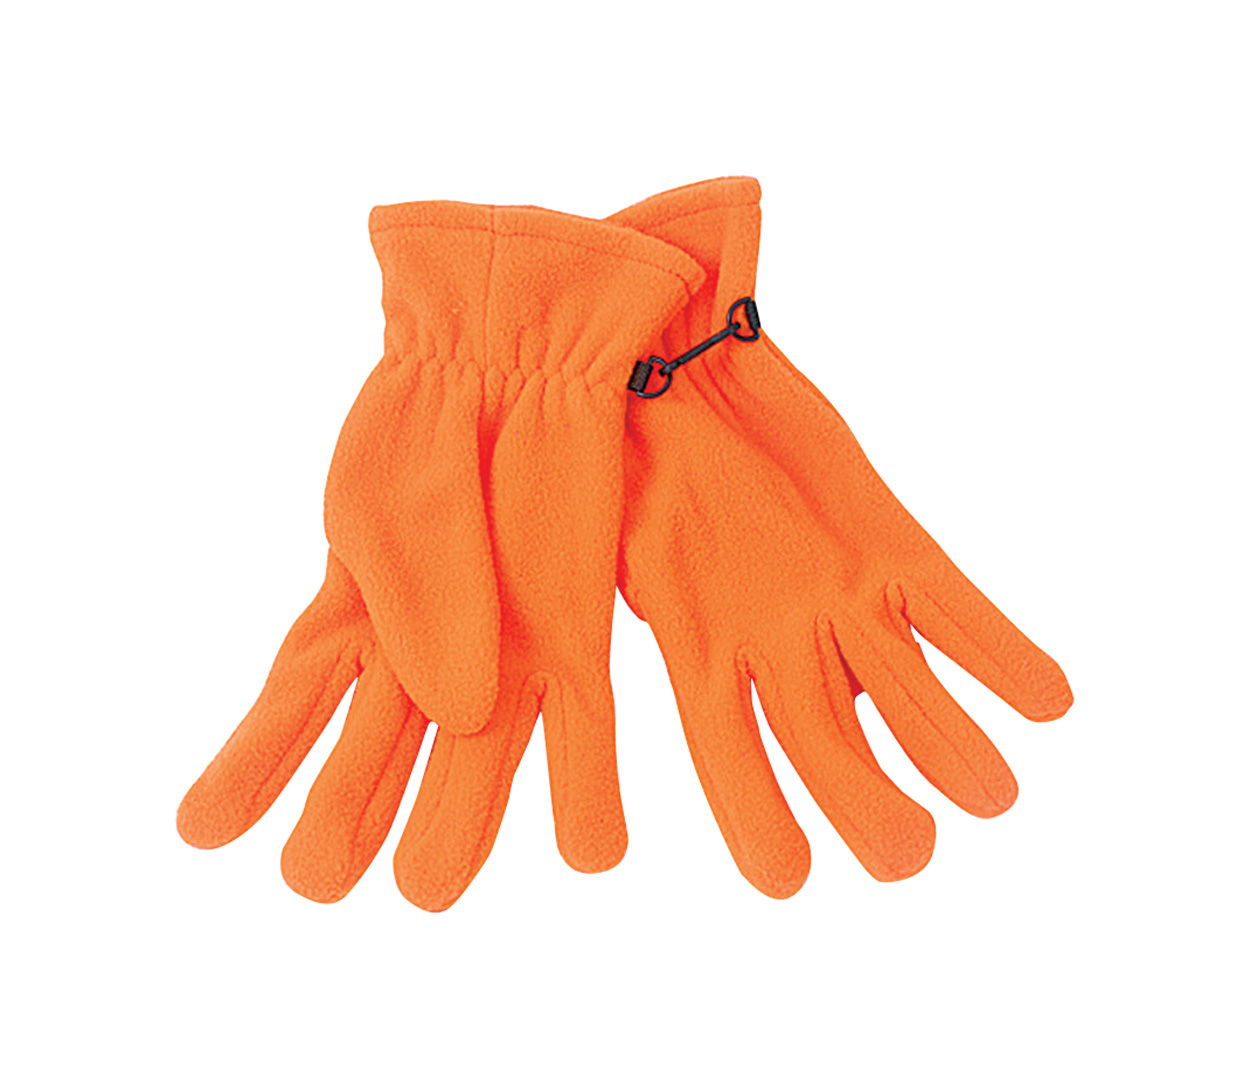 Promo  Monti rukavice, narančaste boje